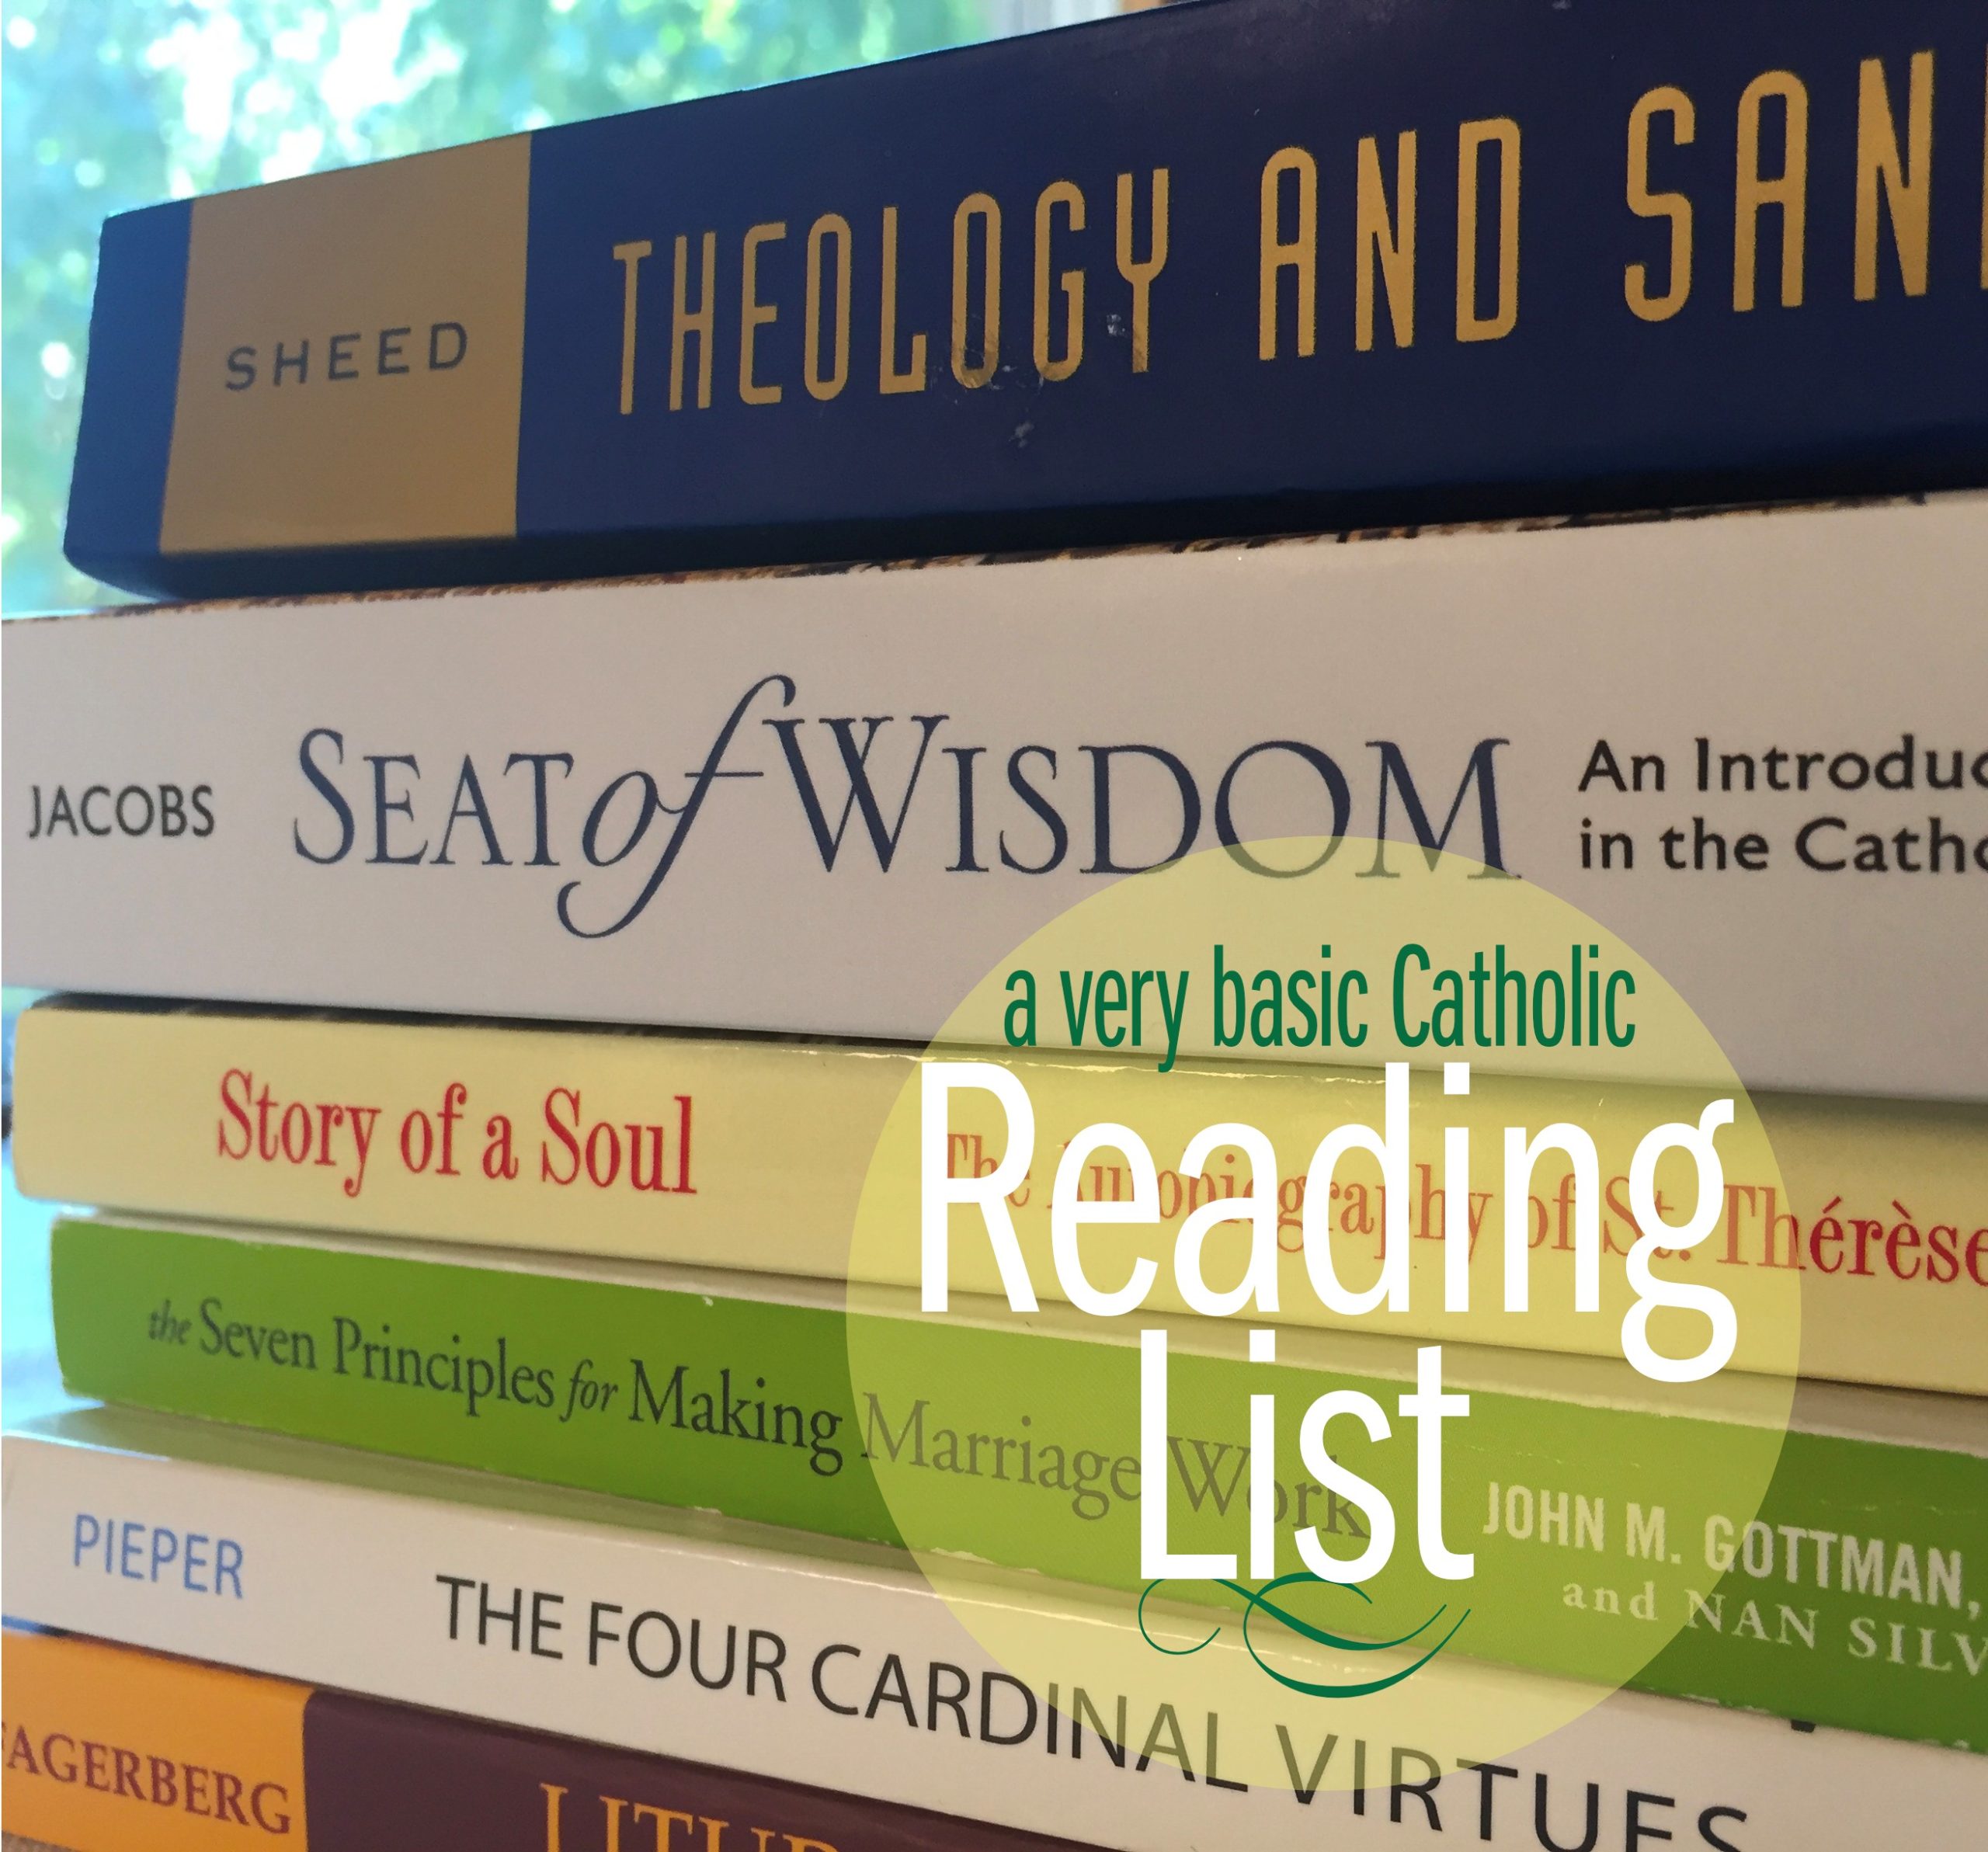 Father Gerald's Catholic Reading List